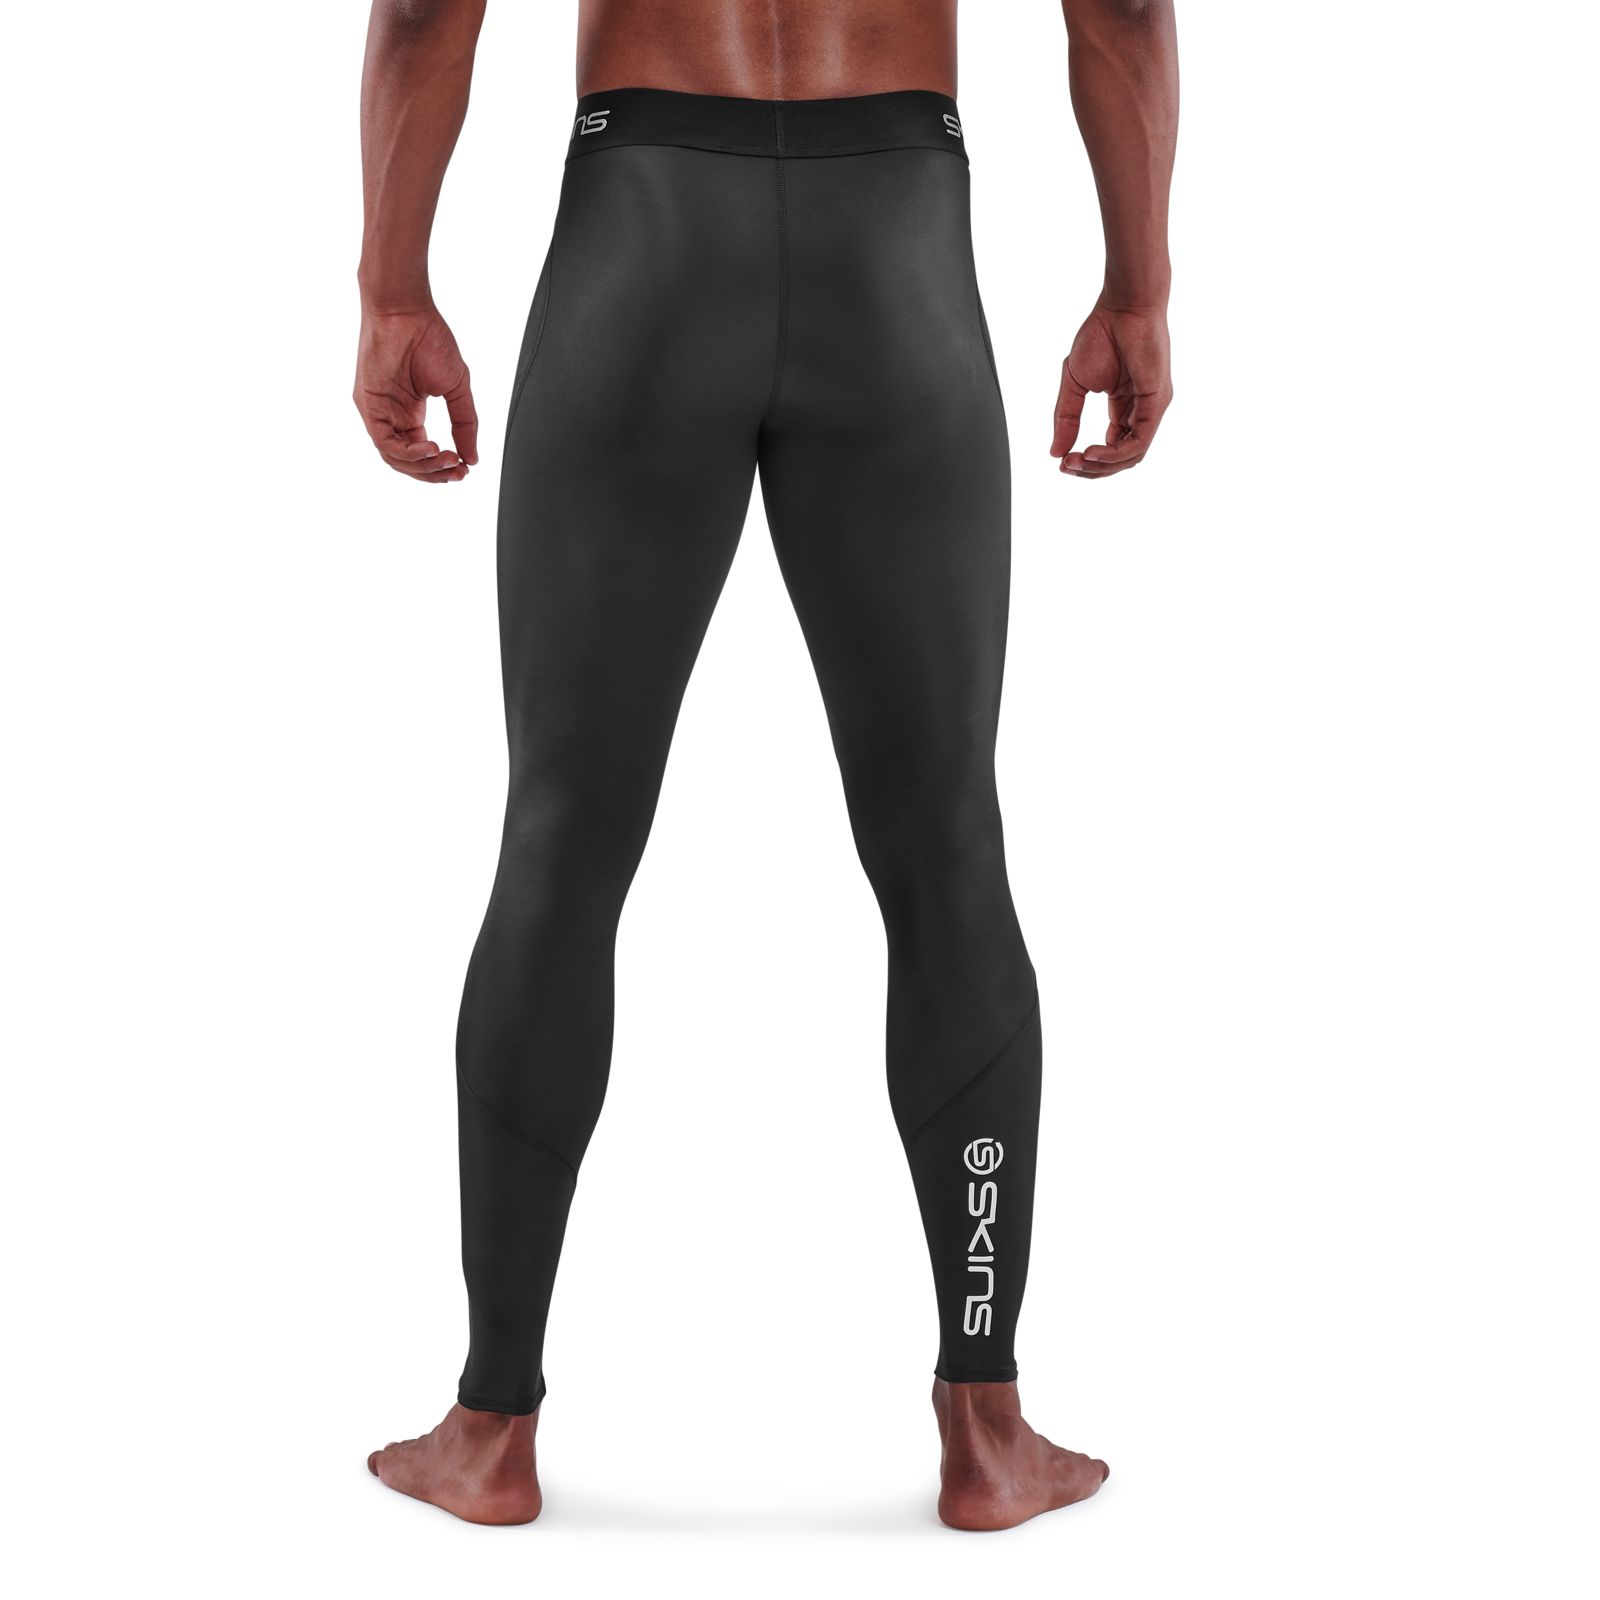 Skins Compression S DNAmic Force Mens Long Tights Sports Activewear/Gym  Black